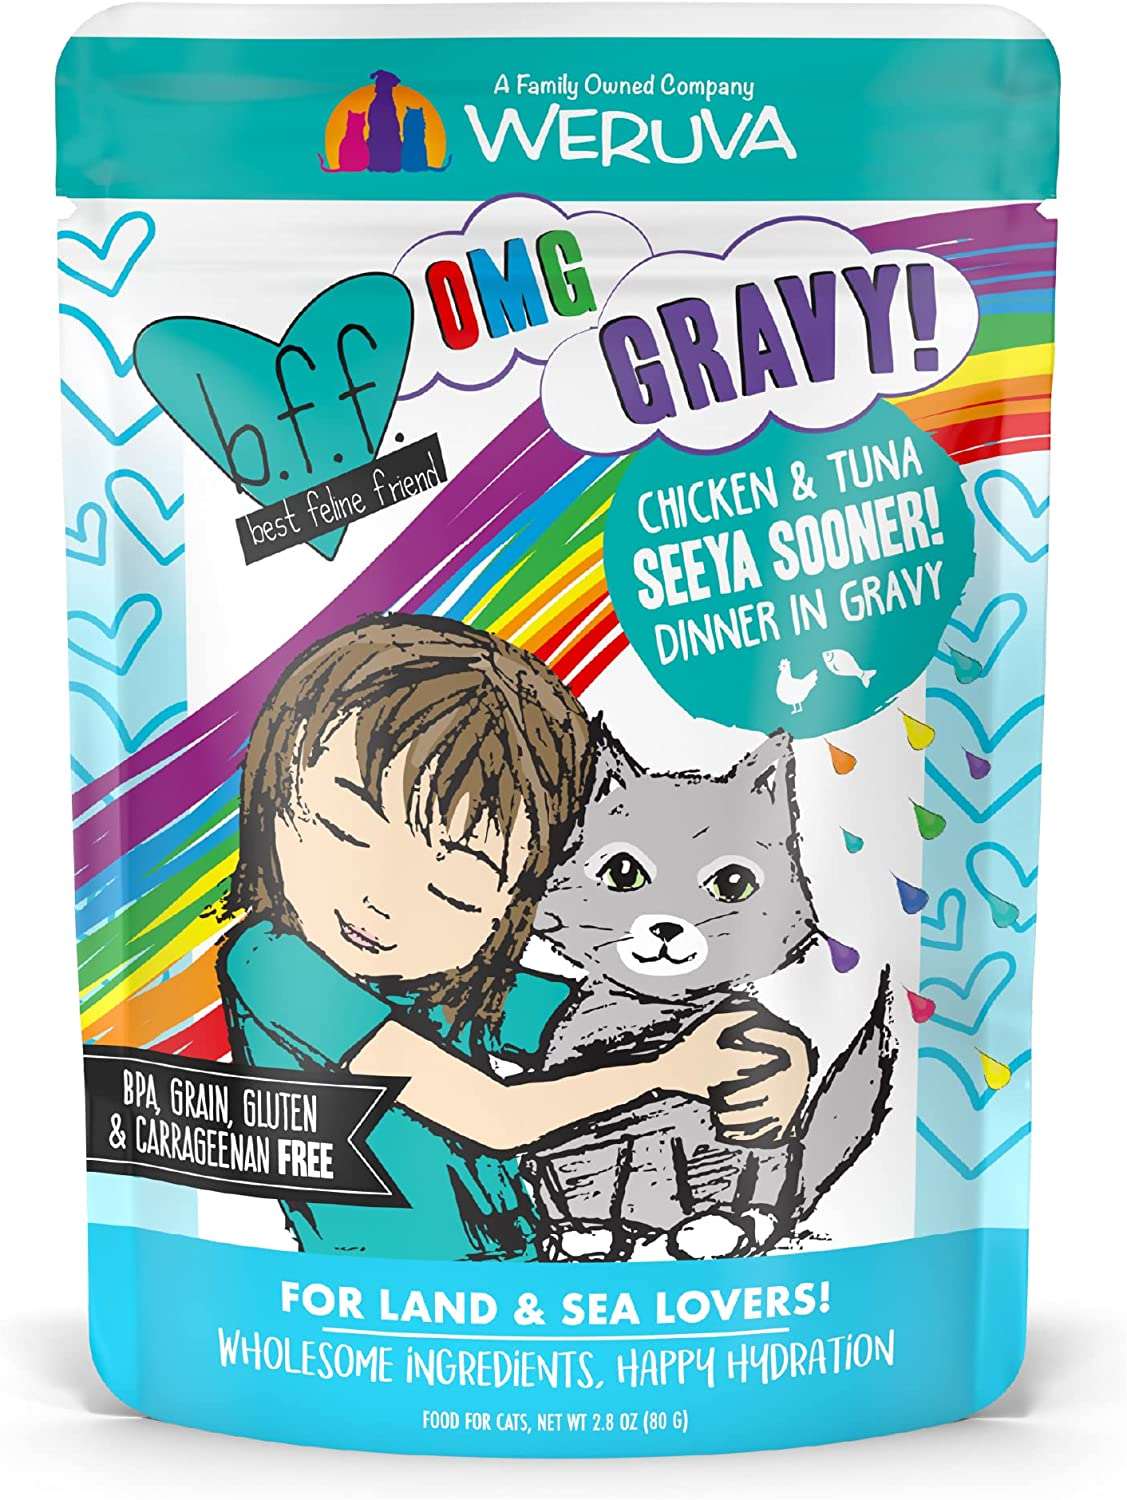 B.F.F. Omg - Best Feline Friend Oh My Gravy!, Seeya Sooner! With Chicken & Tuna In Gravy Cat Food By Weruva, 2.8Oz Pouch (Pack Of 12) - Hatke